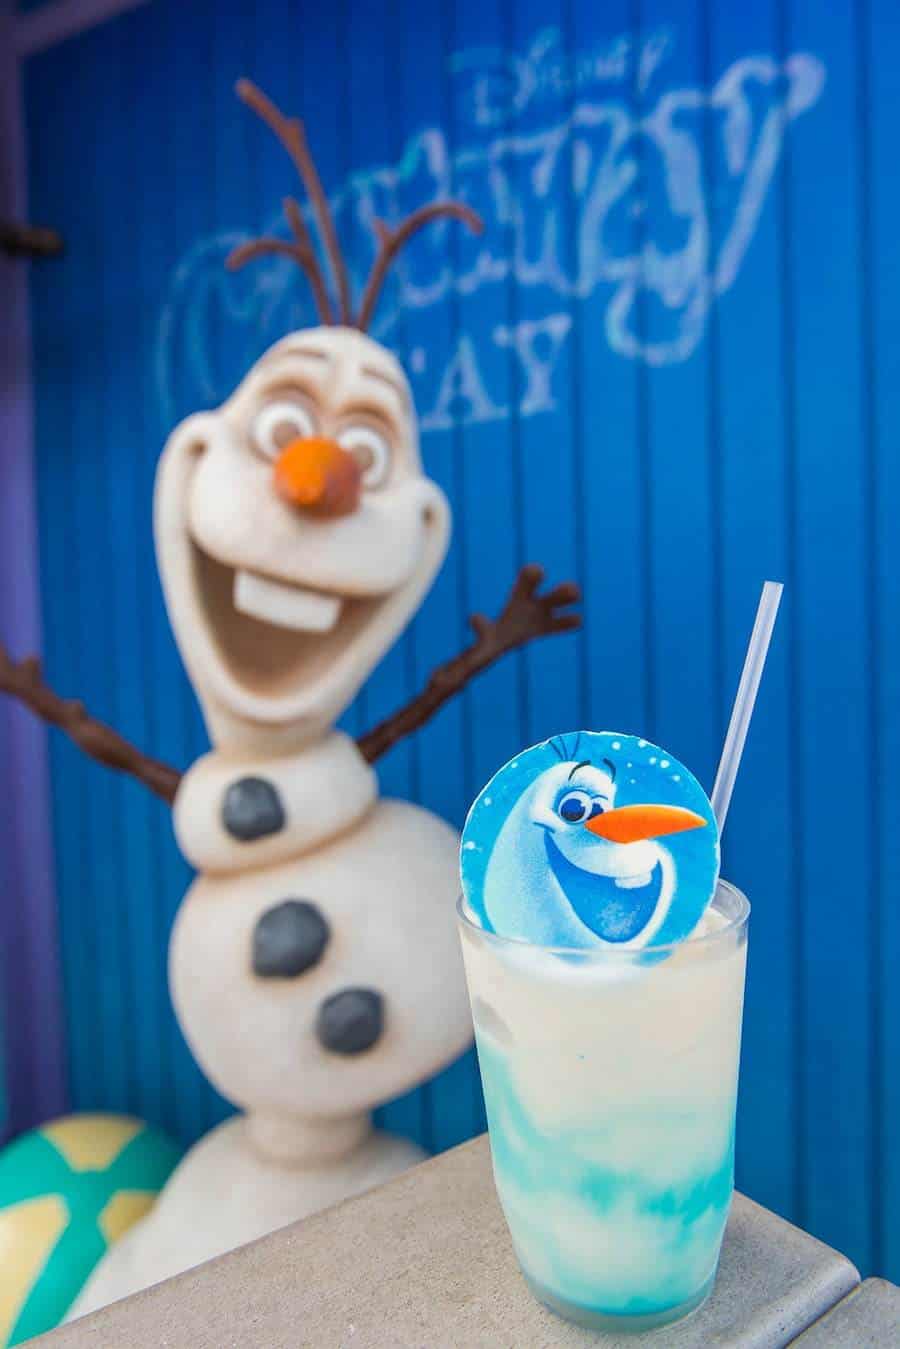 Enjoy a sweet treat at Olaf's Summertime Freeze.